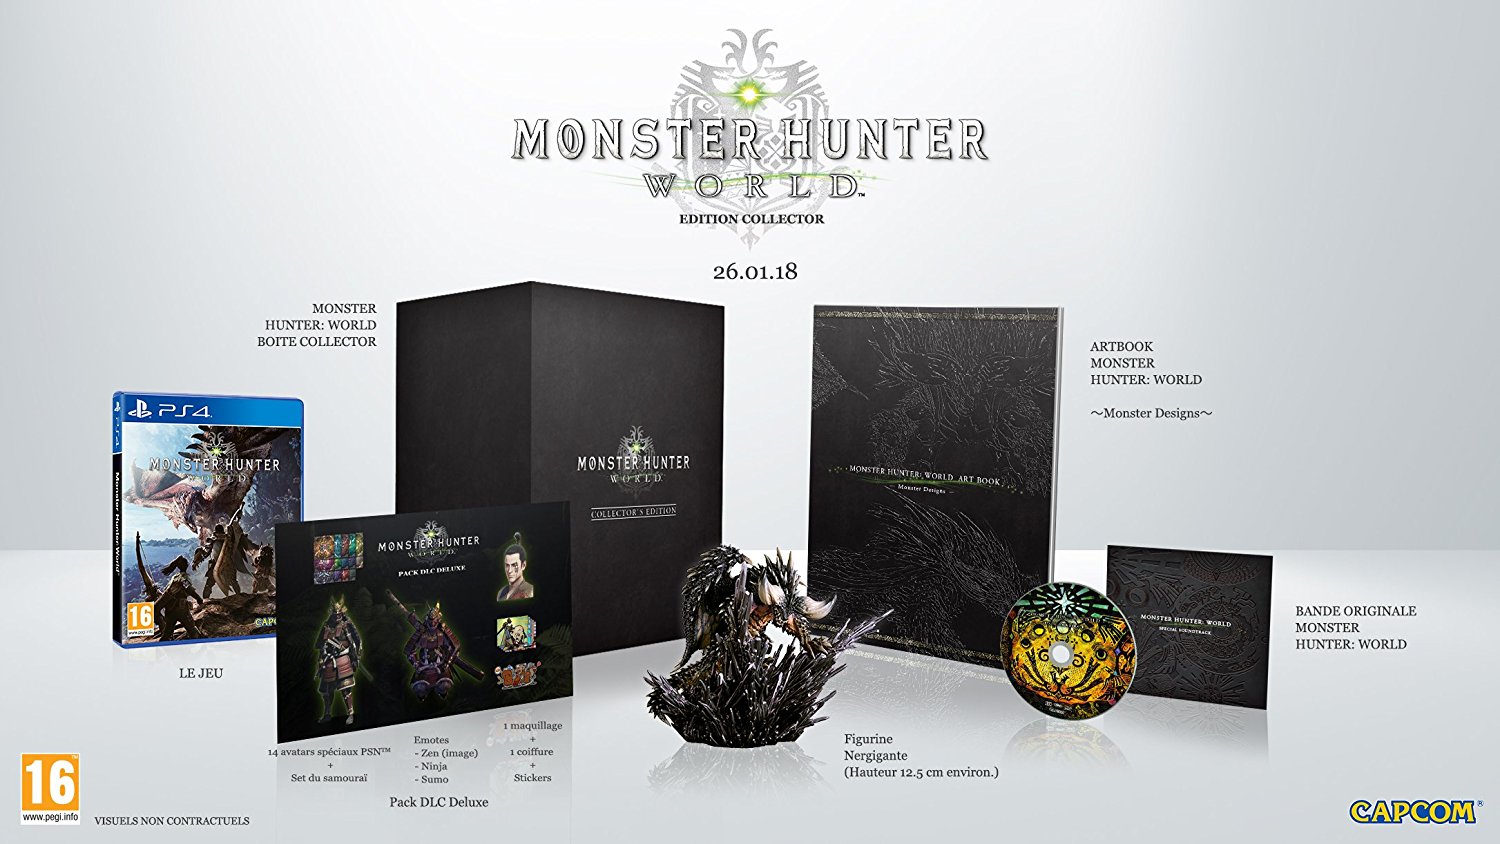 Monster hunter world collector